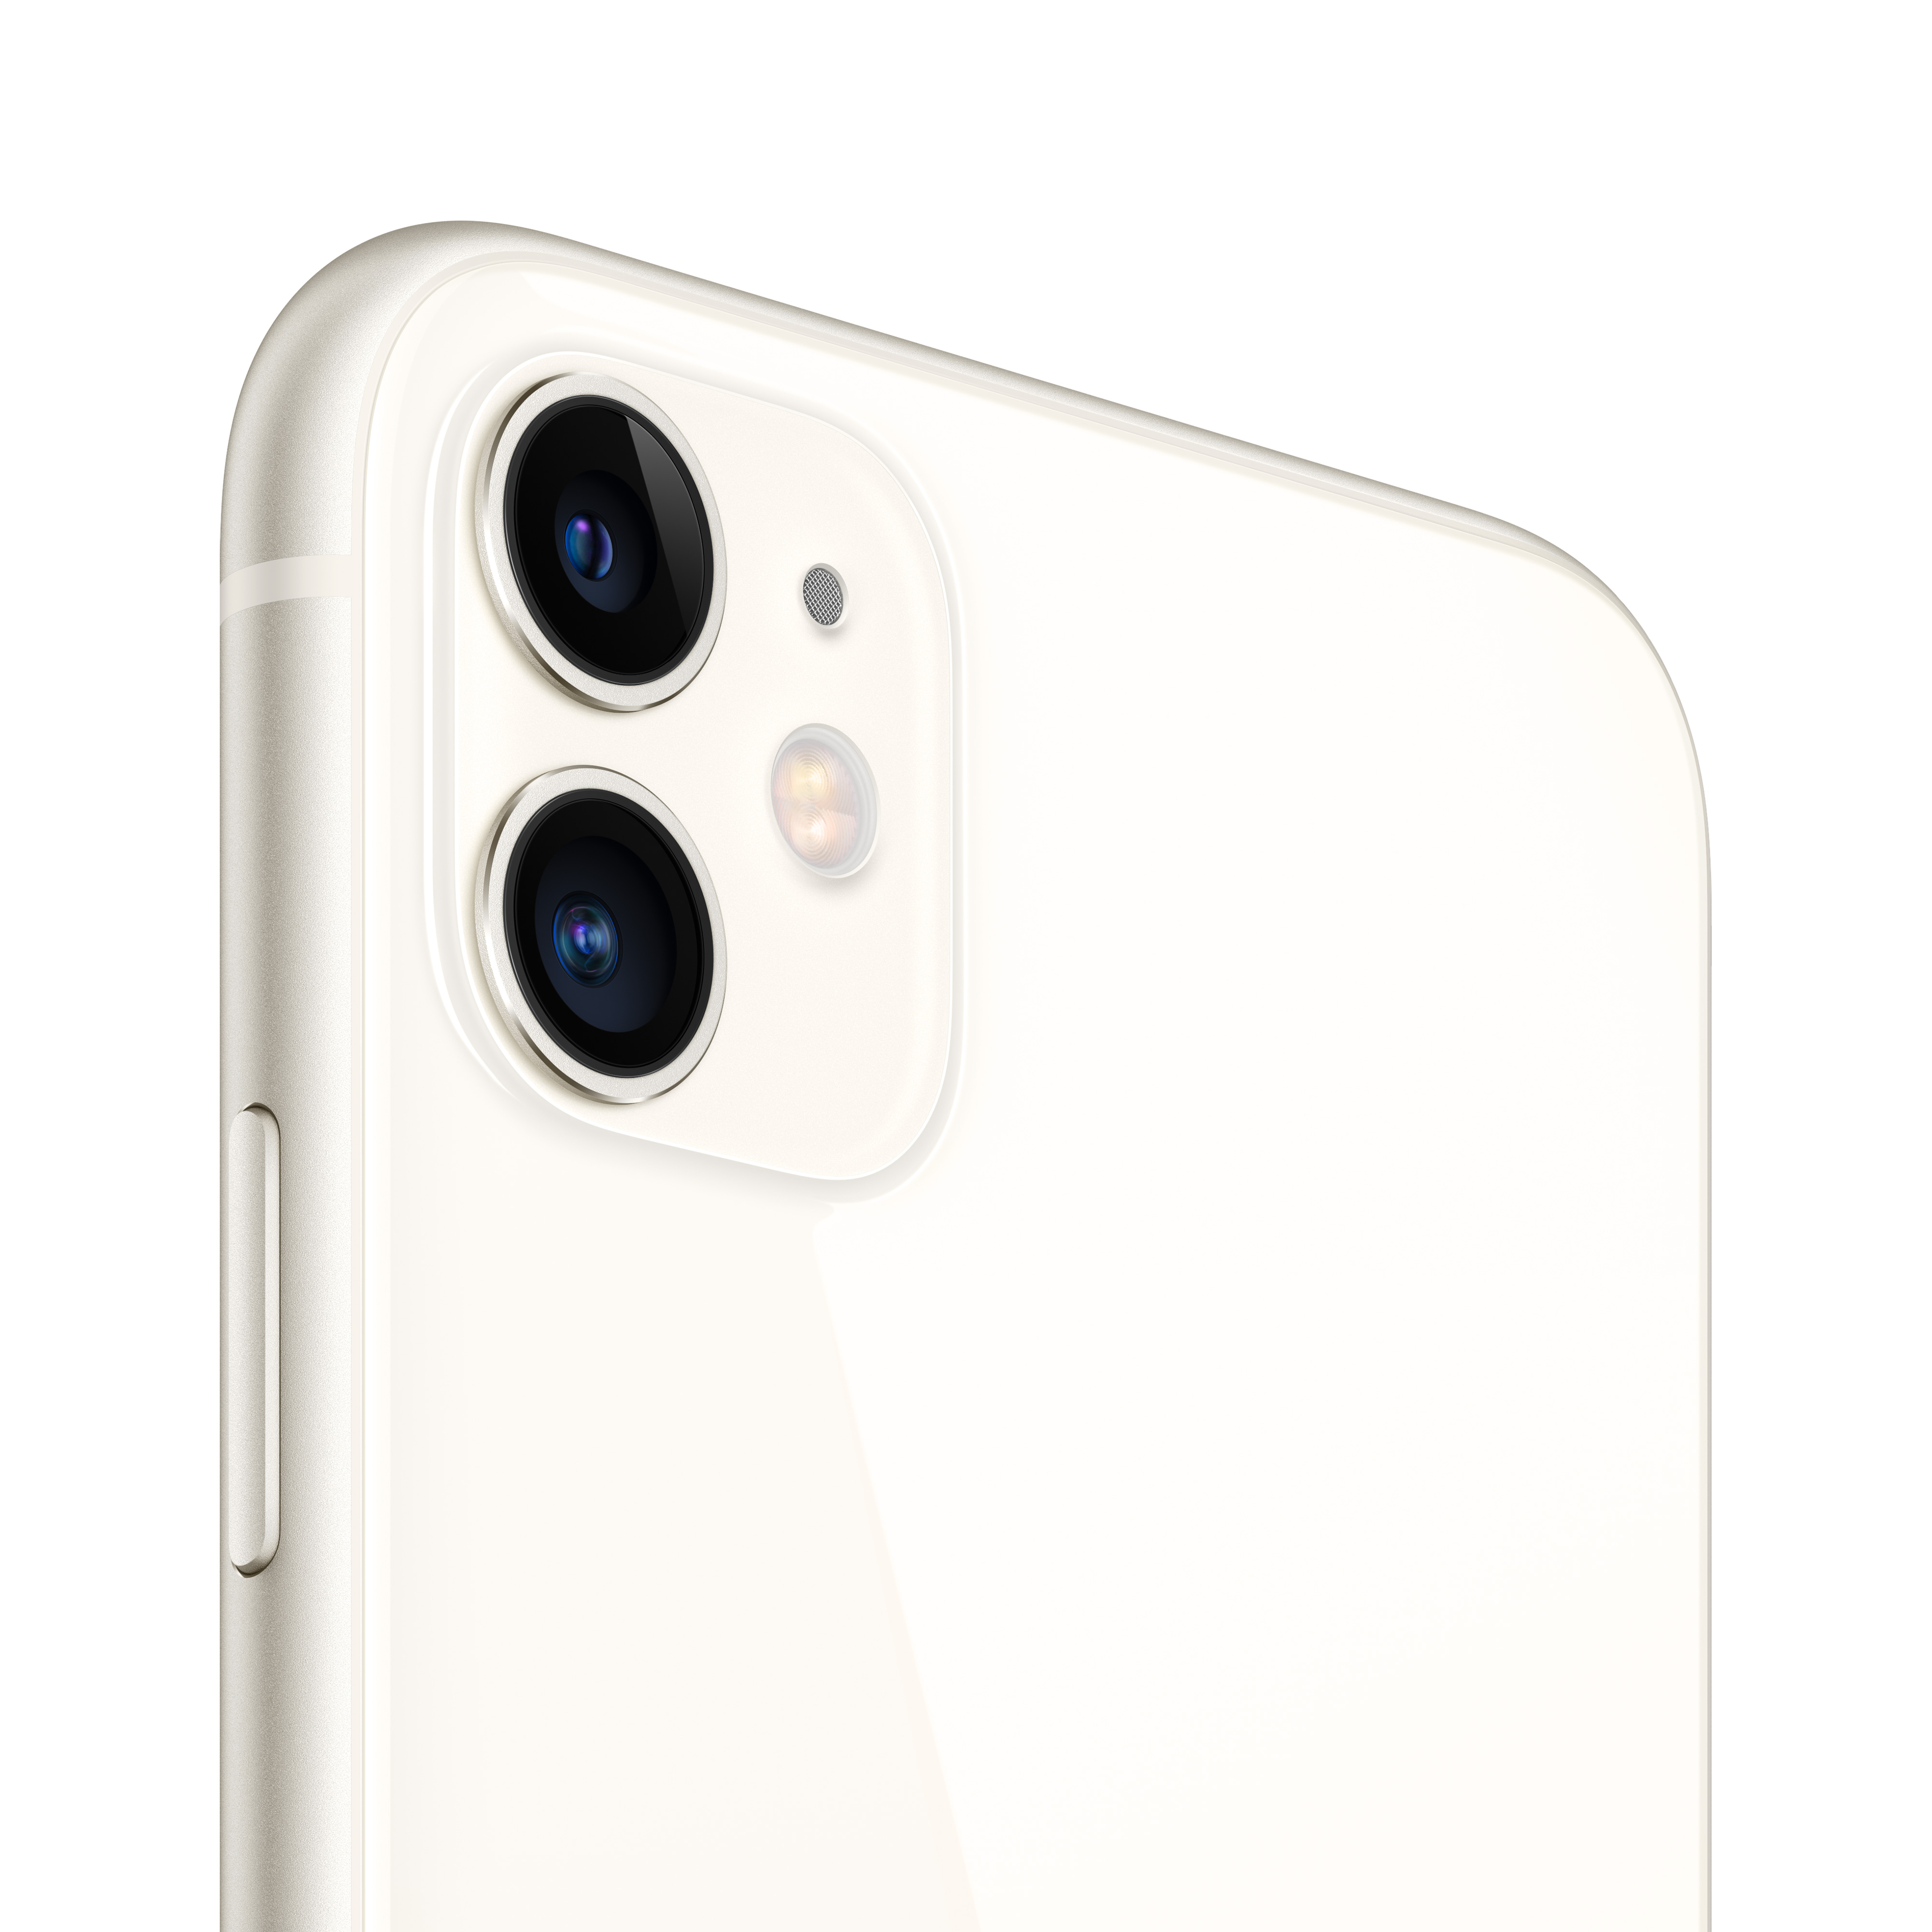 Фото — Apple iPhone 11, 64 ГБ, белый, новая комплектация